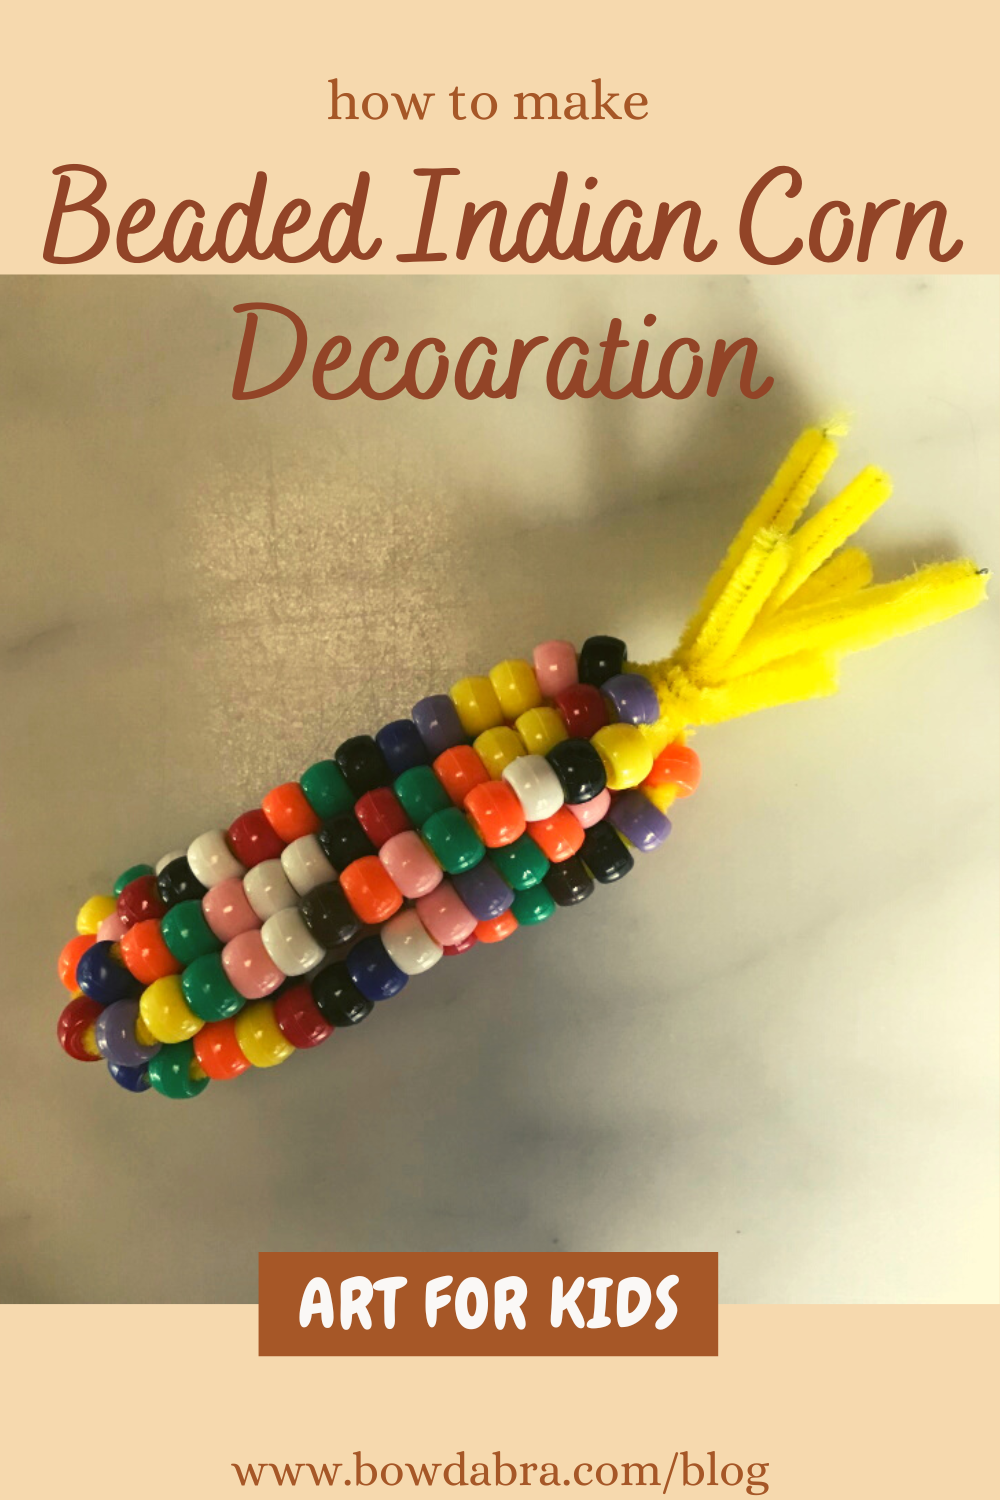 Beaded Indian Corn Decoration